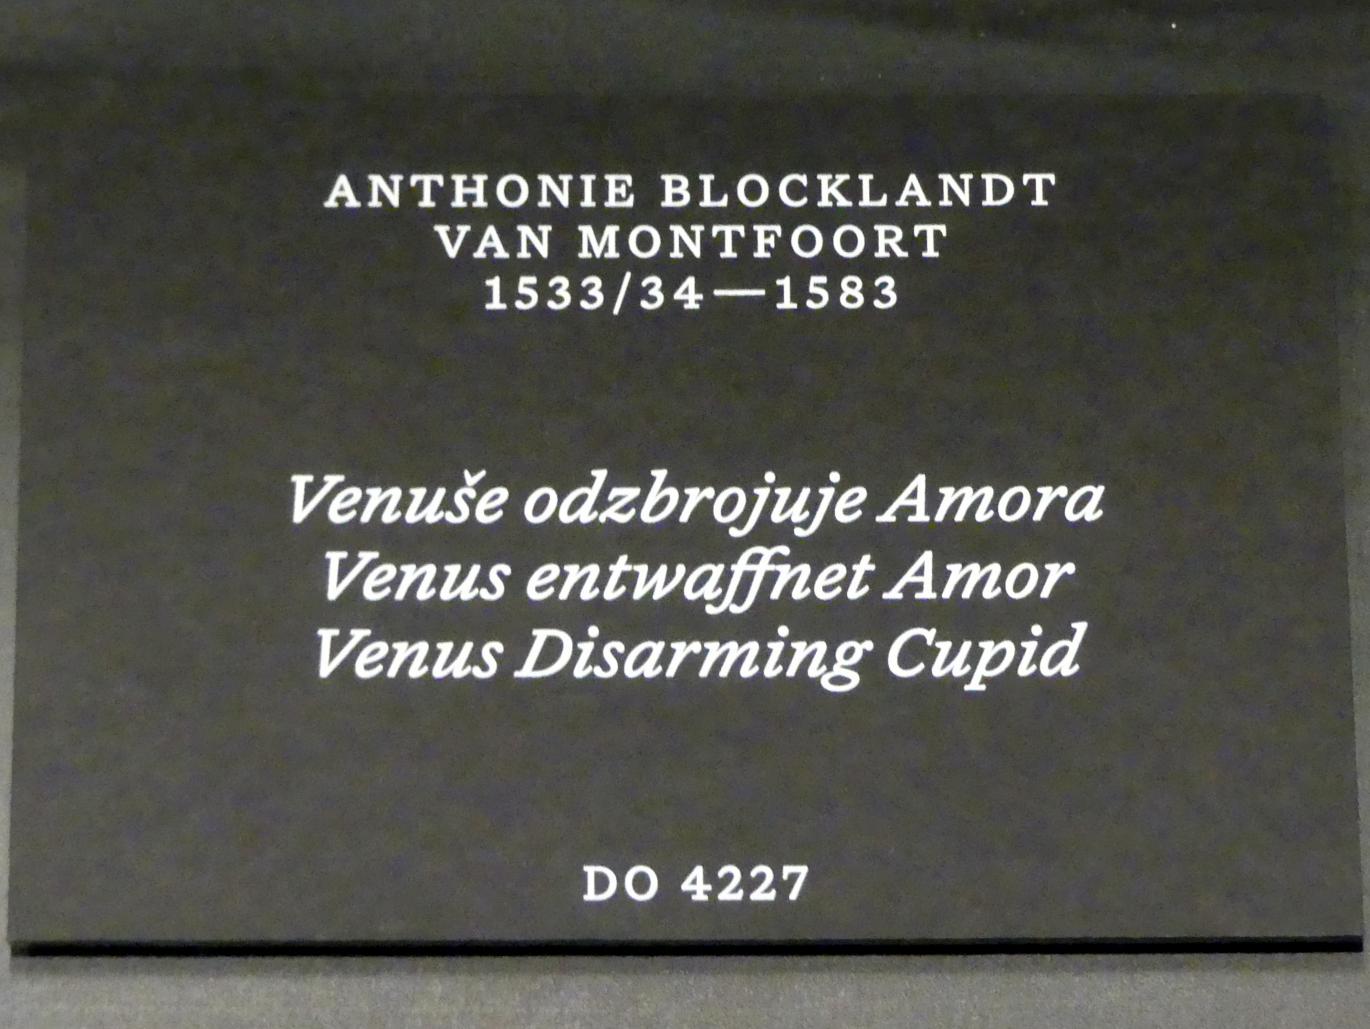 Anthonie Blocklandt van Montfoort (Antony van Blokland) (1575), Venus entwaffnet Amor, Prag, Nationalgalerie im Palais Schwarzenberg, 2. Obergeschoss, Saal 4, Undatiert, Bild 2/2